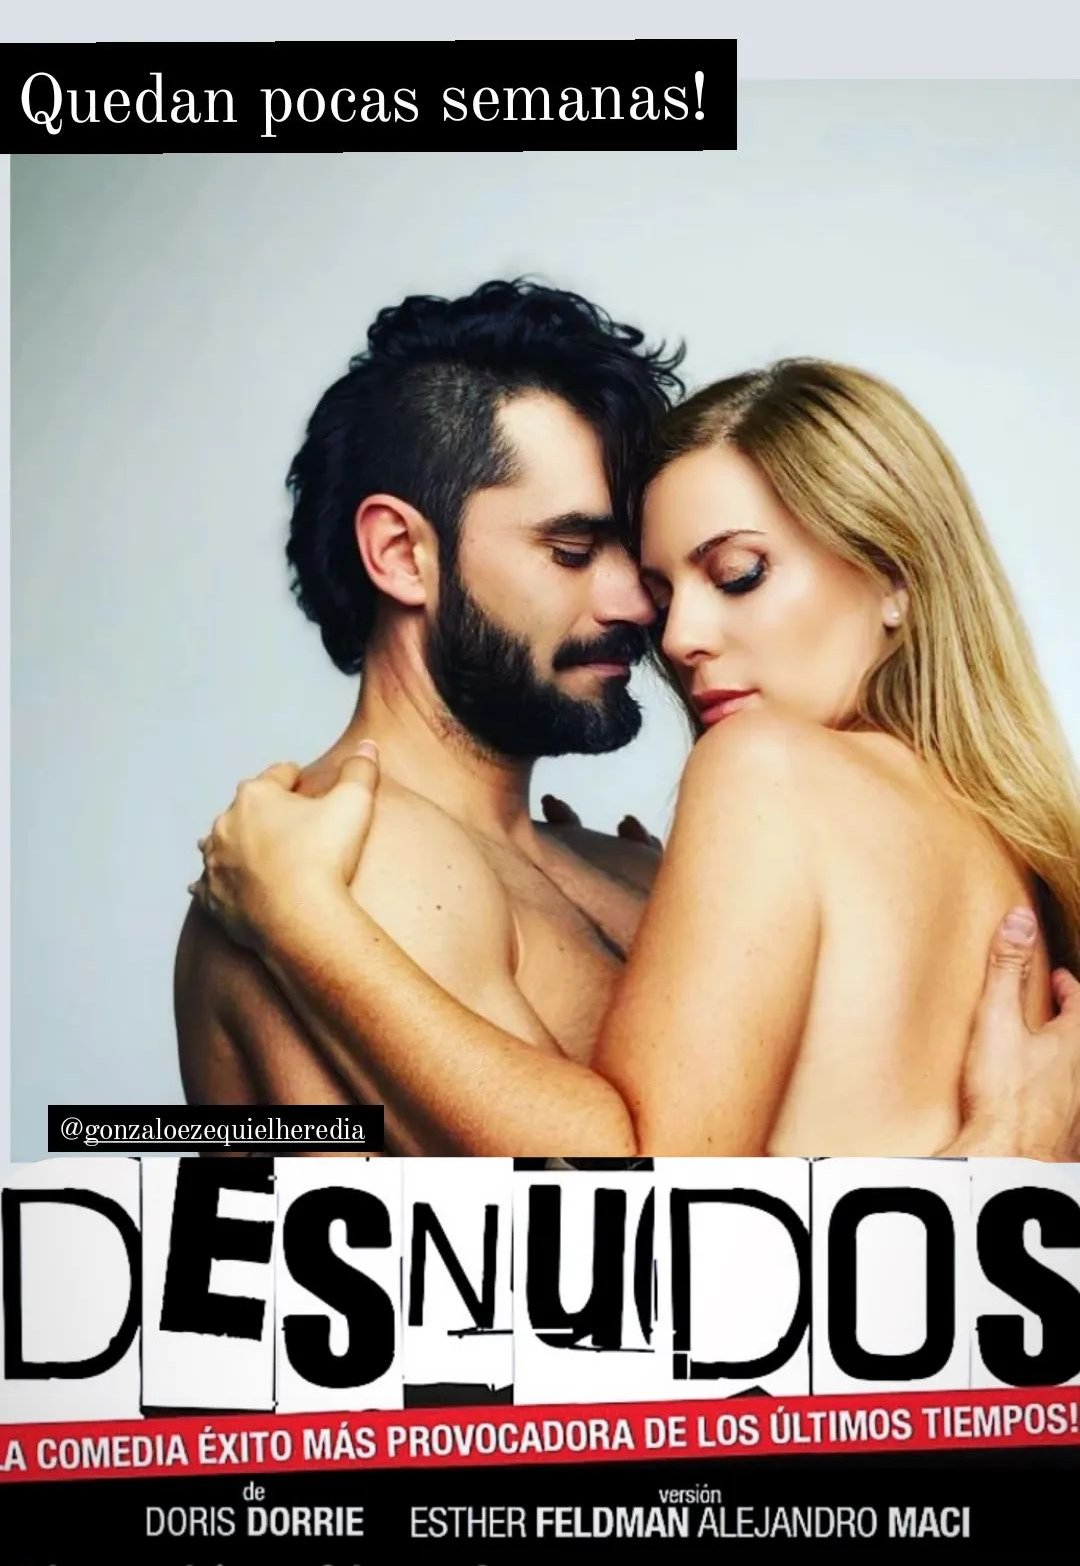 Mercedes Scapola on X: Este jueves empieza otra semana de funciones de # desnudos @gonzaloherediao @estebanlamothe @brendagandiniok @cianocaceres  entradas en @Plateanet @TeatroMetSura t.co2Hv8IZXr8S  X